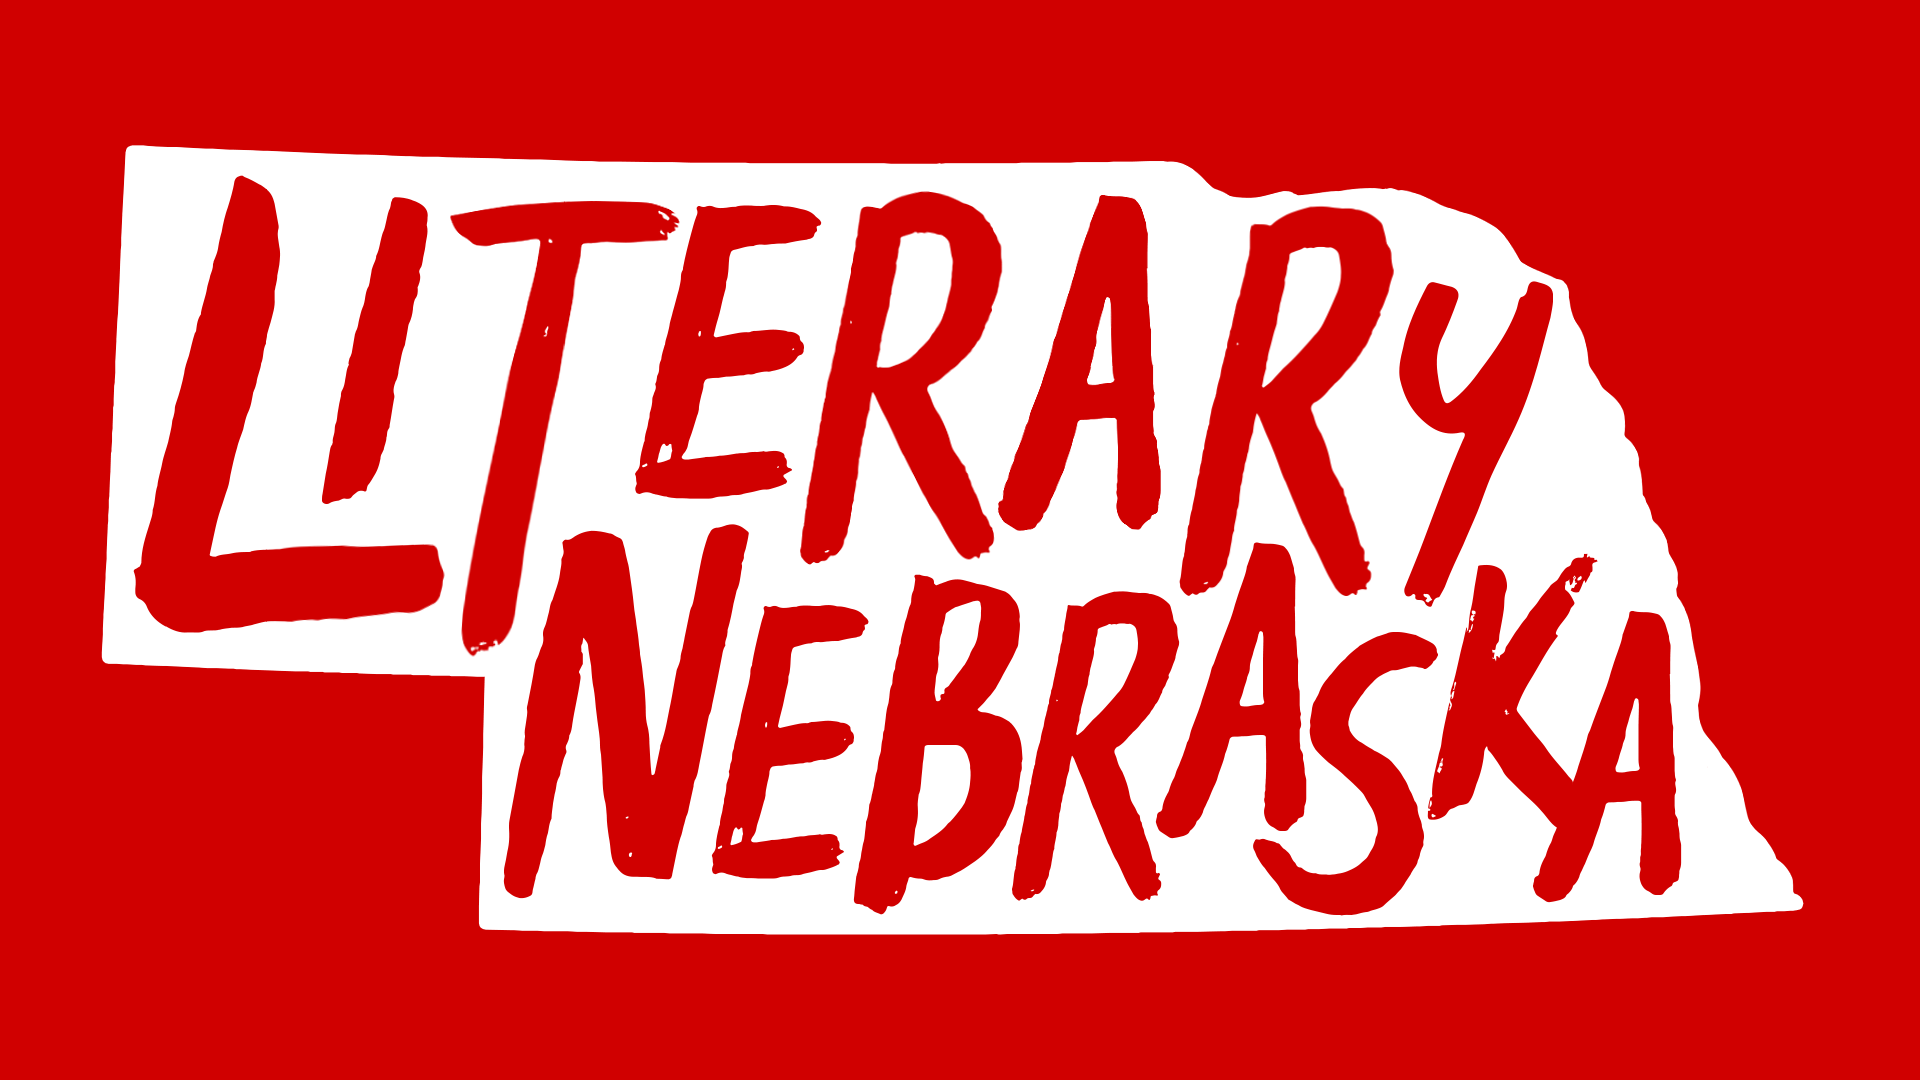 New course dives into Nebraska's literary history